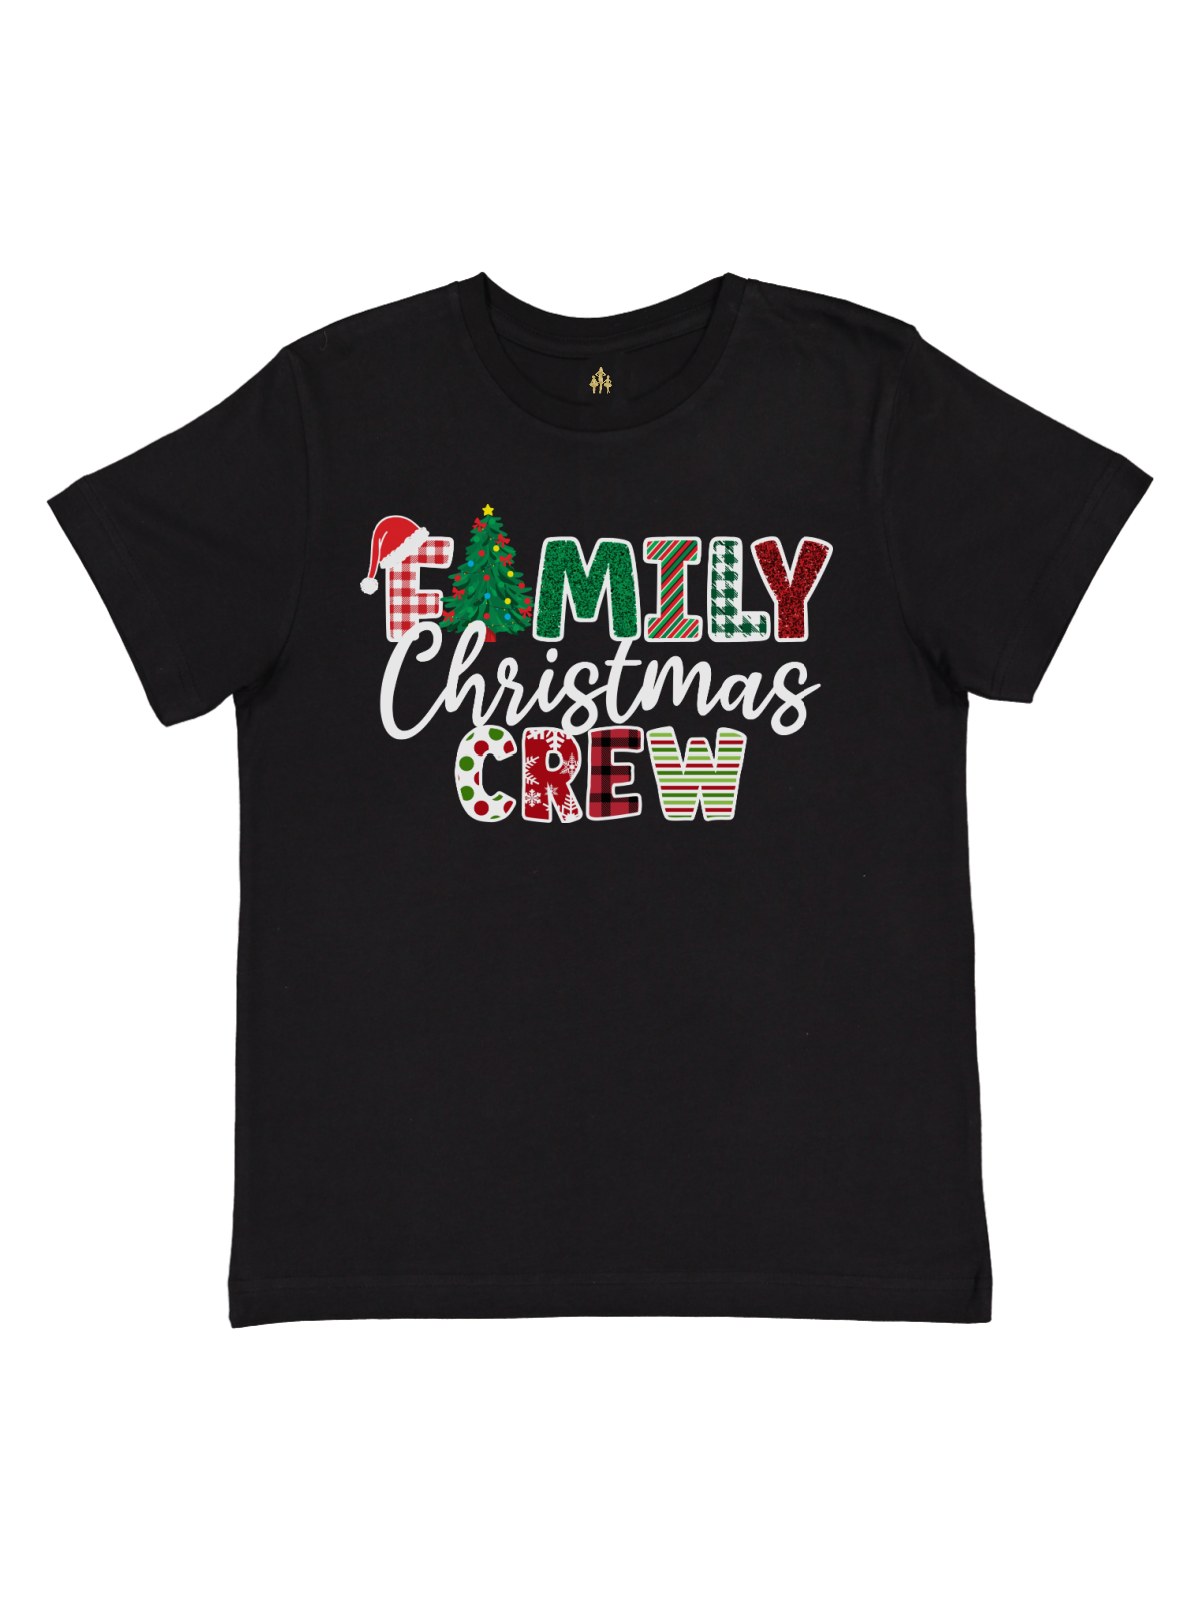 Kids Family Christmas Crew Shirt in Black